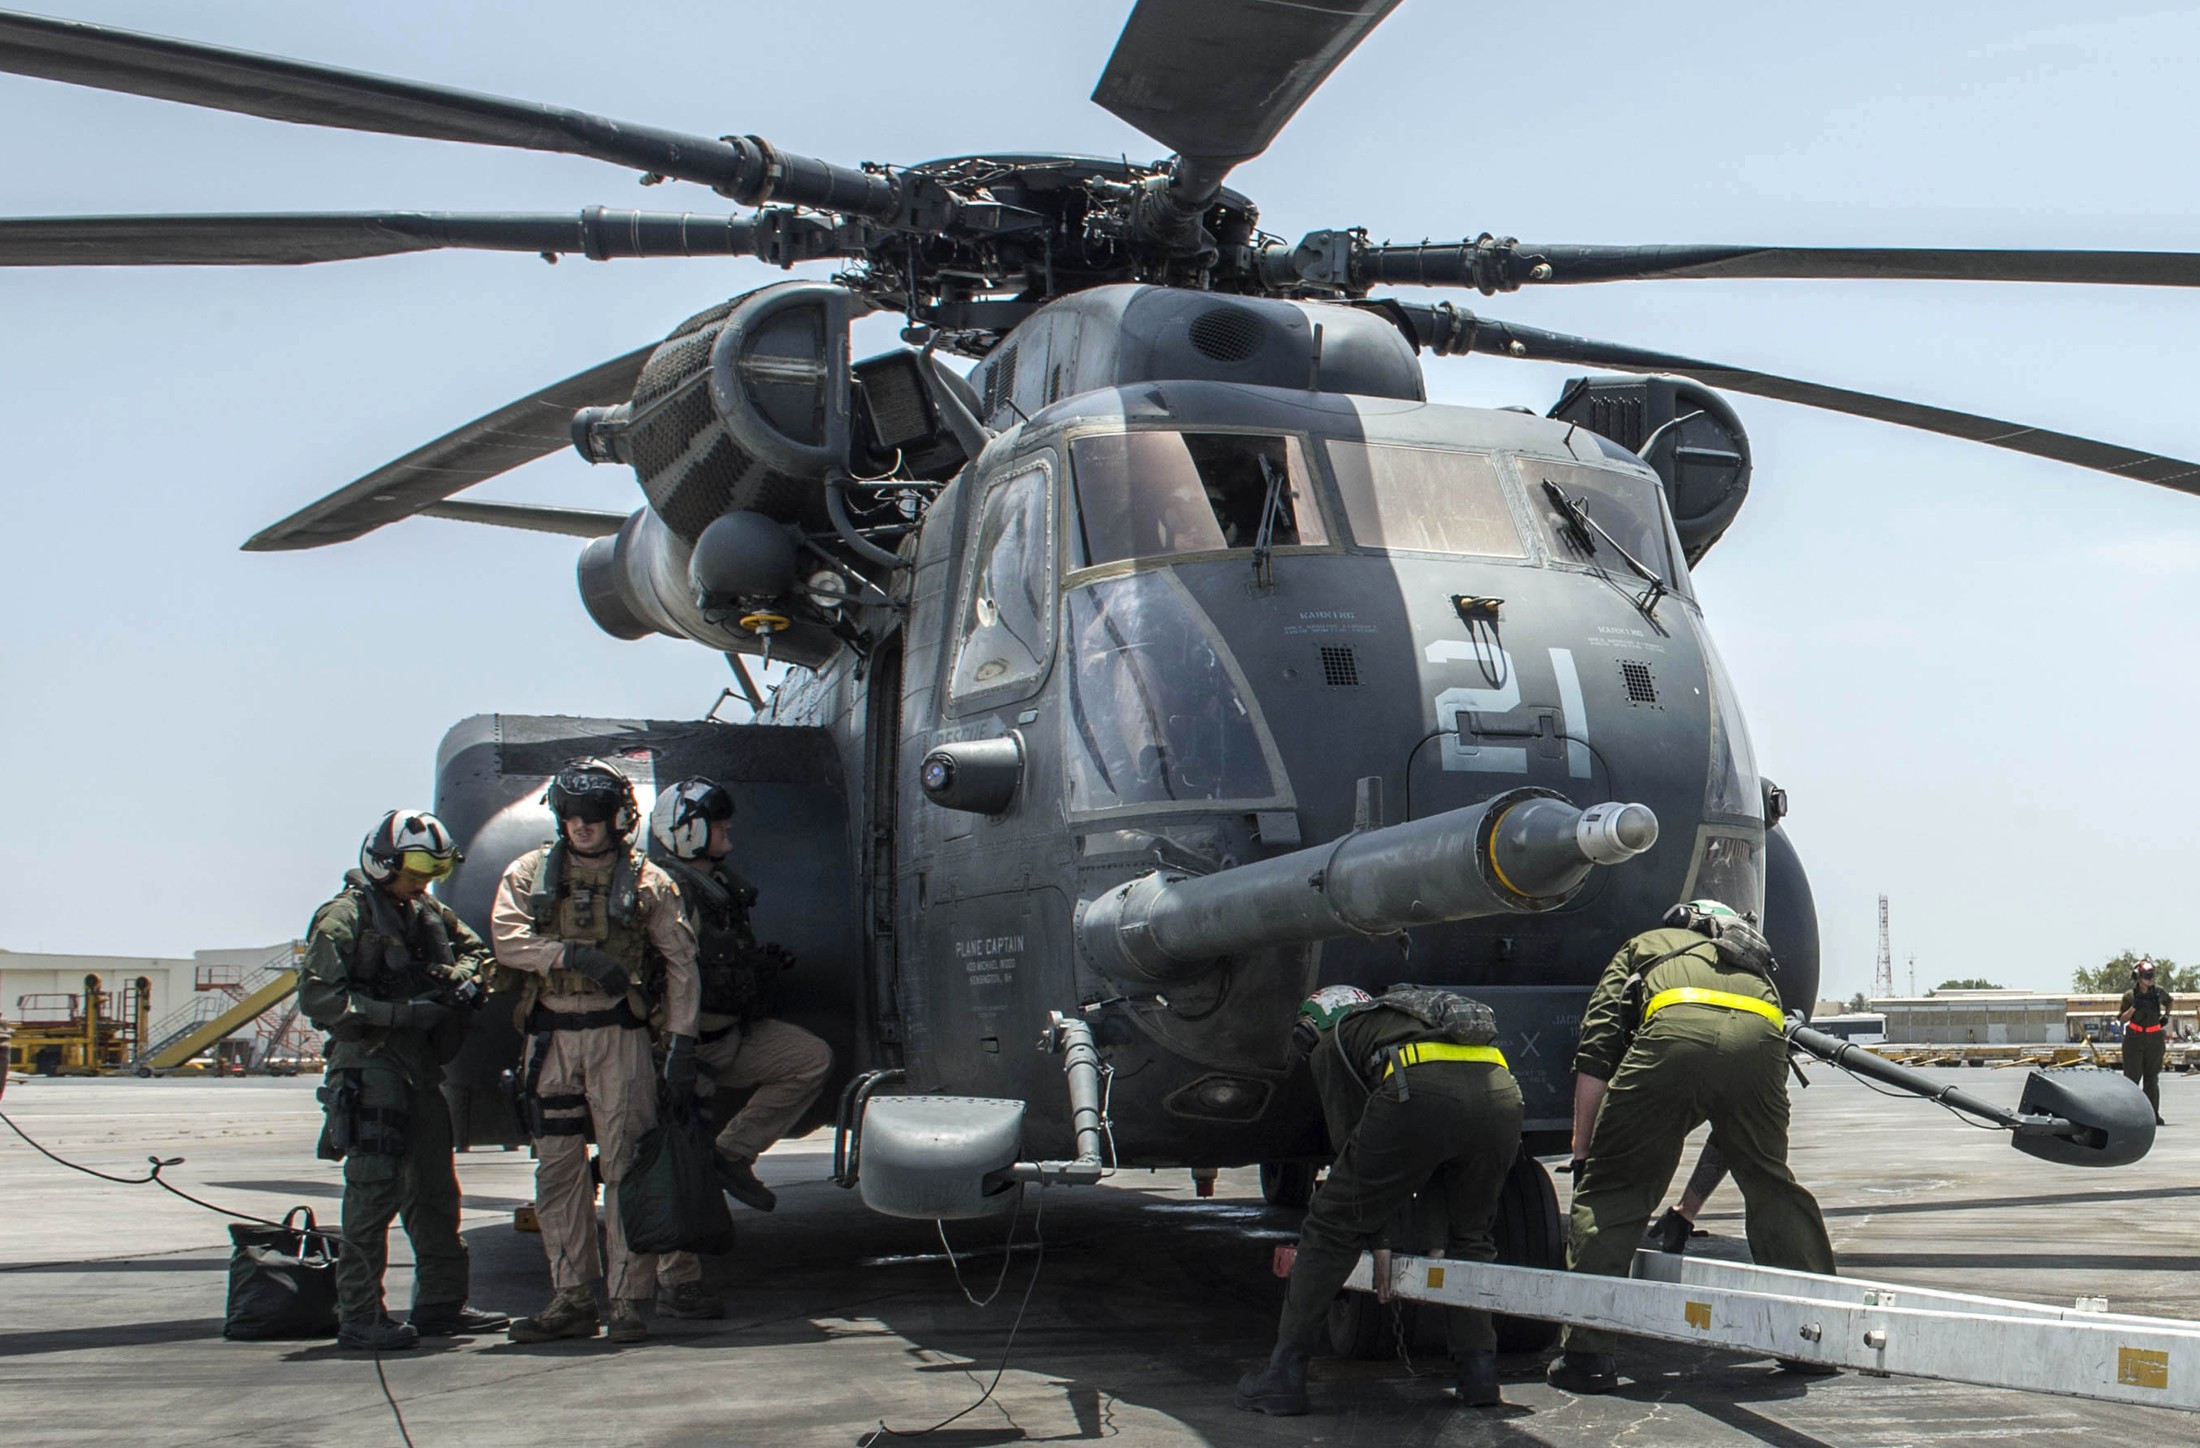 hm-15 blackhawks helicopter mine countermeasures squadron navy mh-53e sea dragon 20 manama bahrain